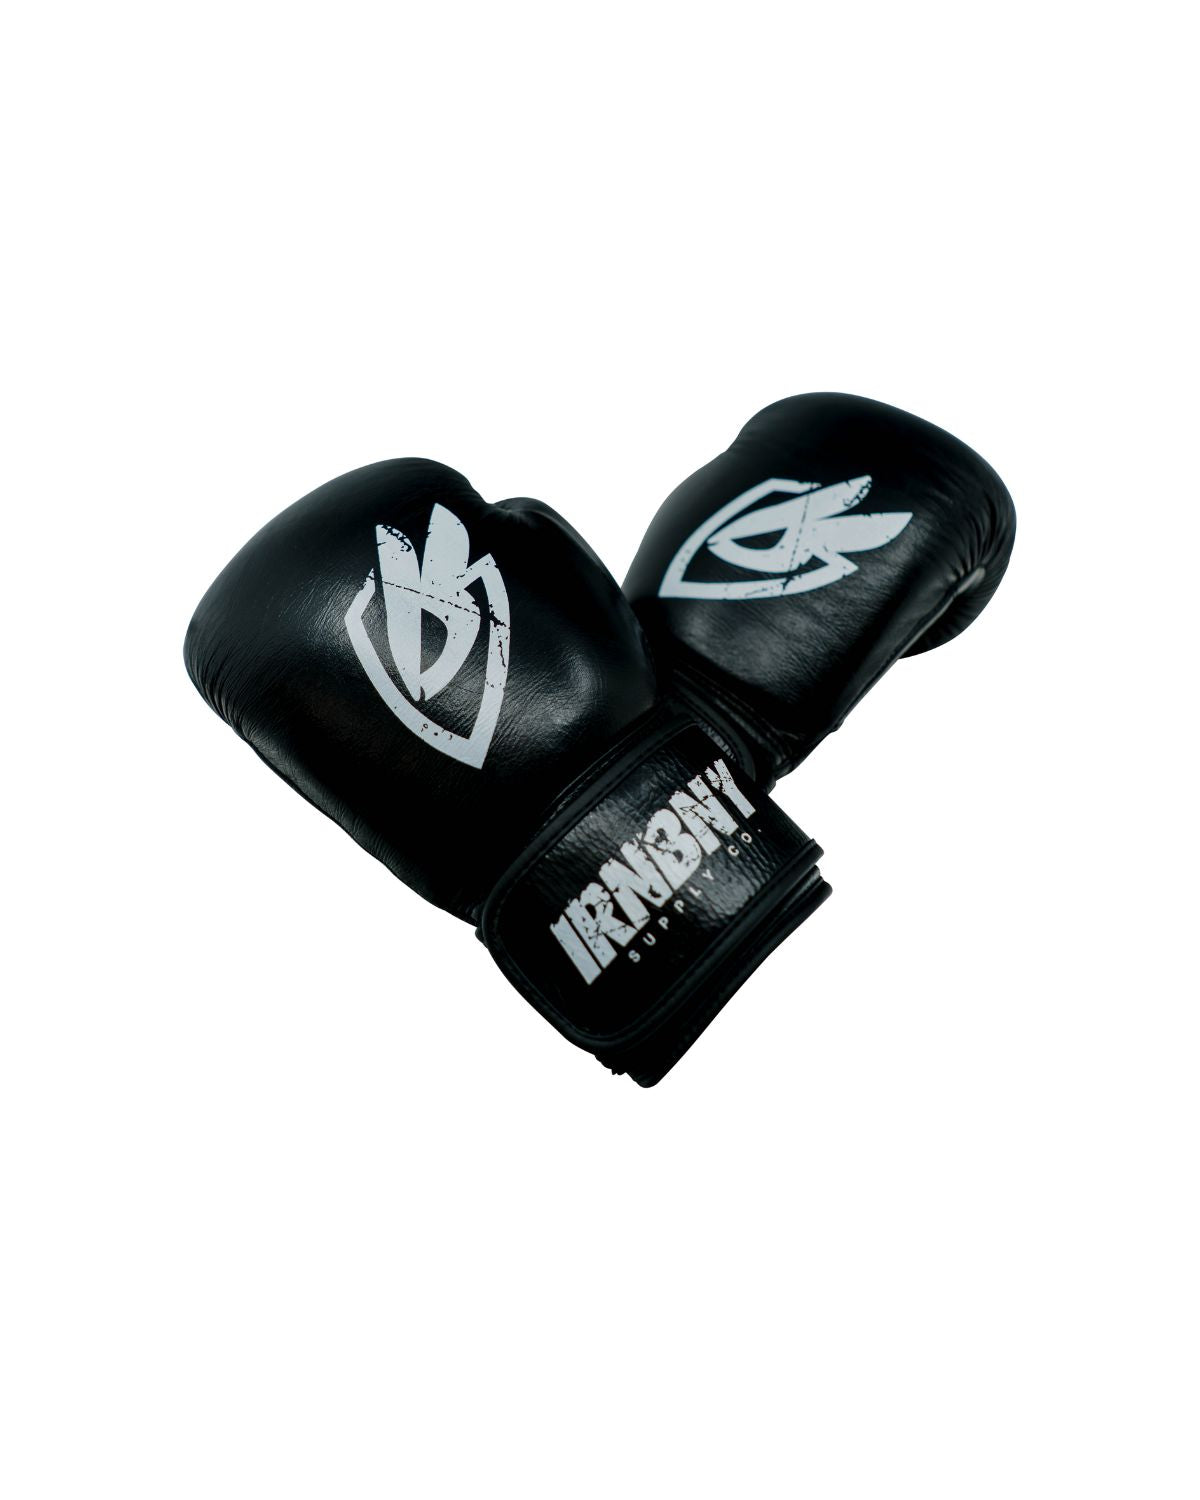 IRNBNY 14oz Gloves (Black)